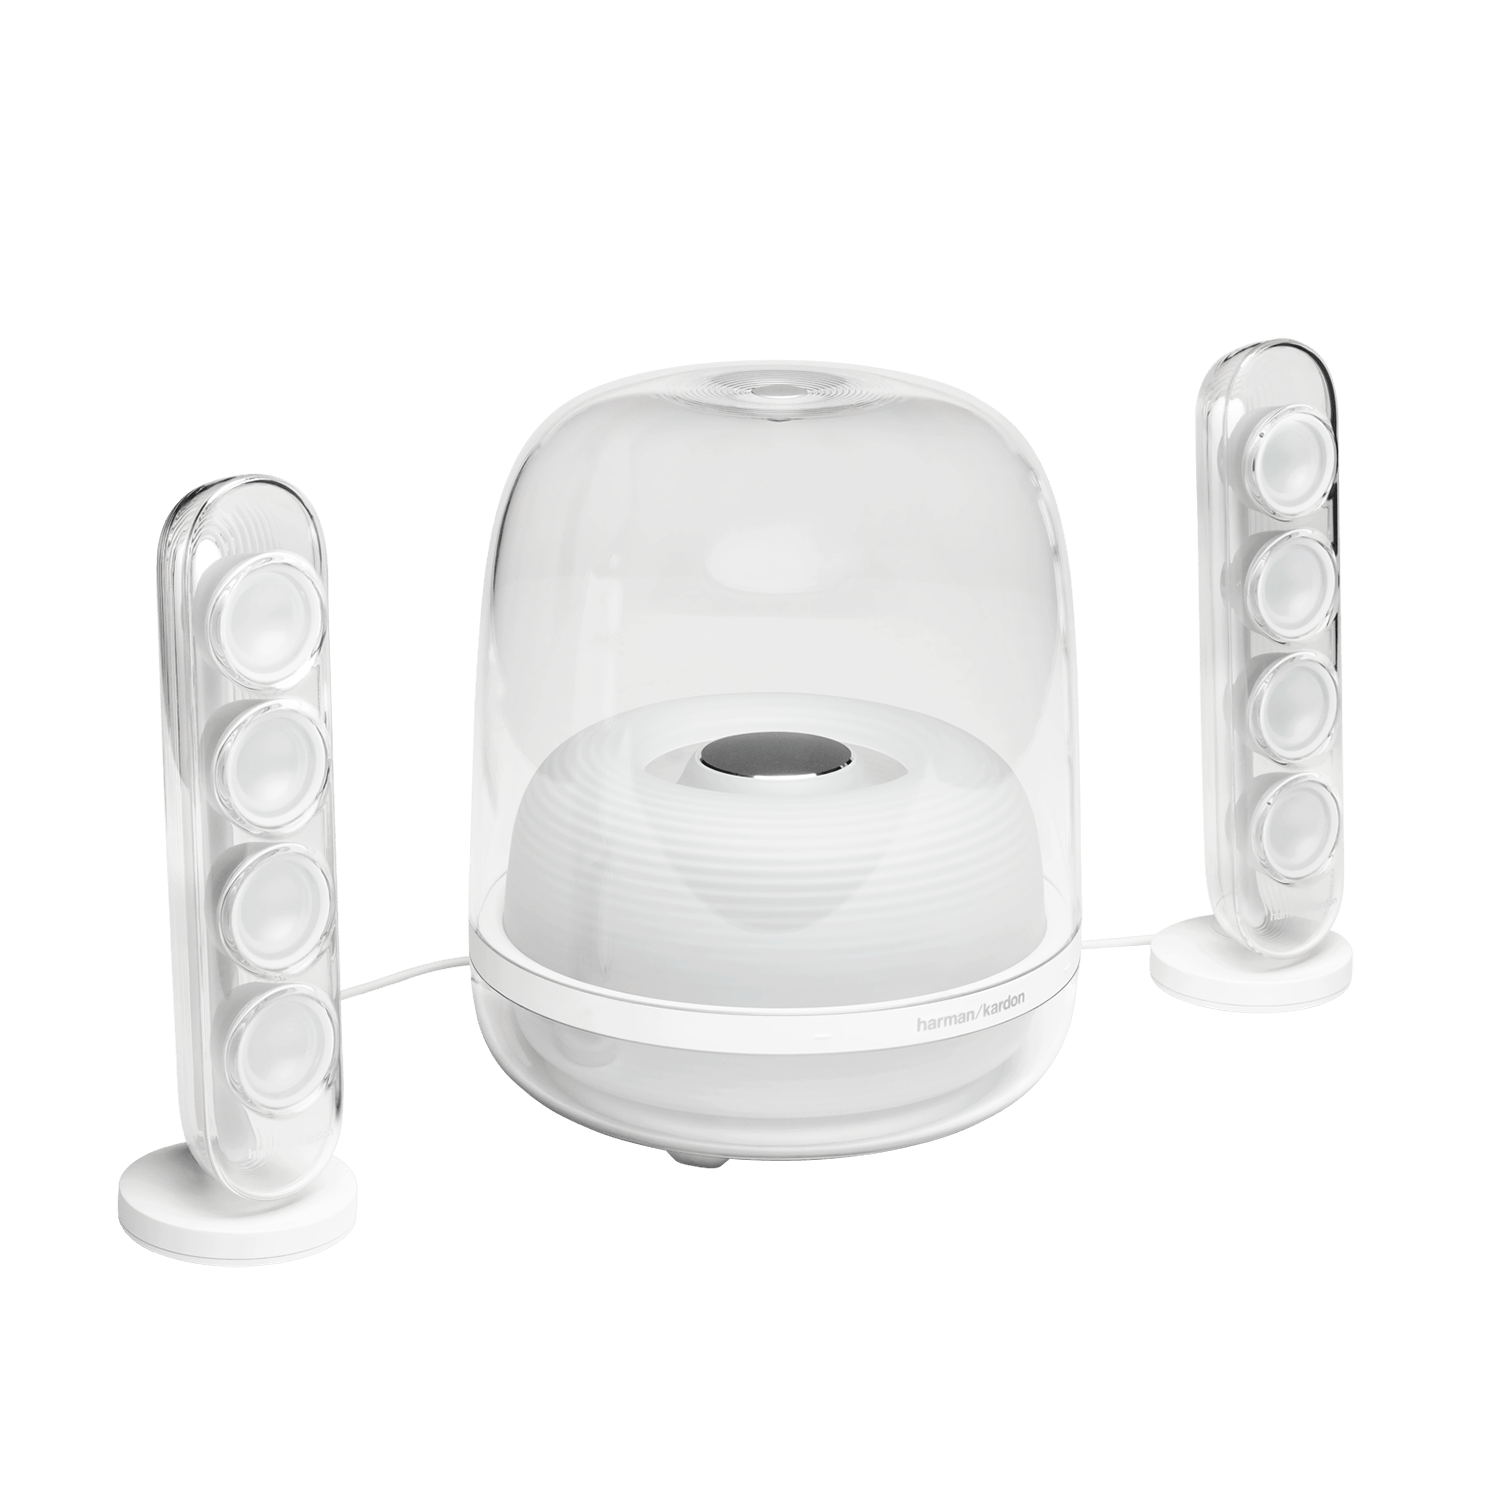 Parlante Harman Kardon SoundSticks4 140w Bluetooth Inalámbrico Color Blanco